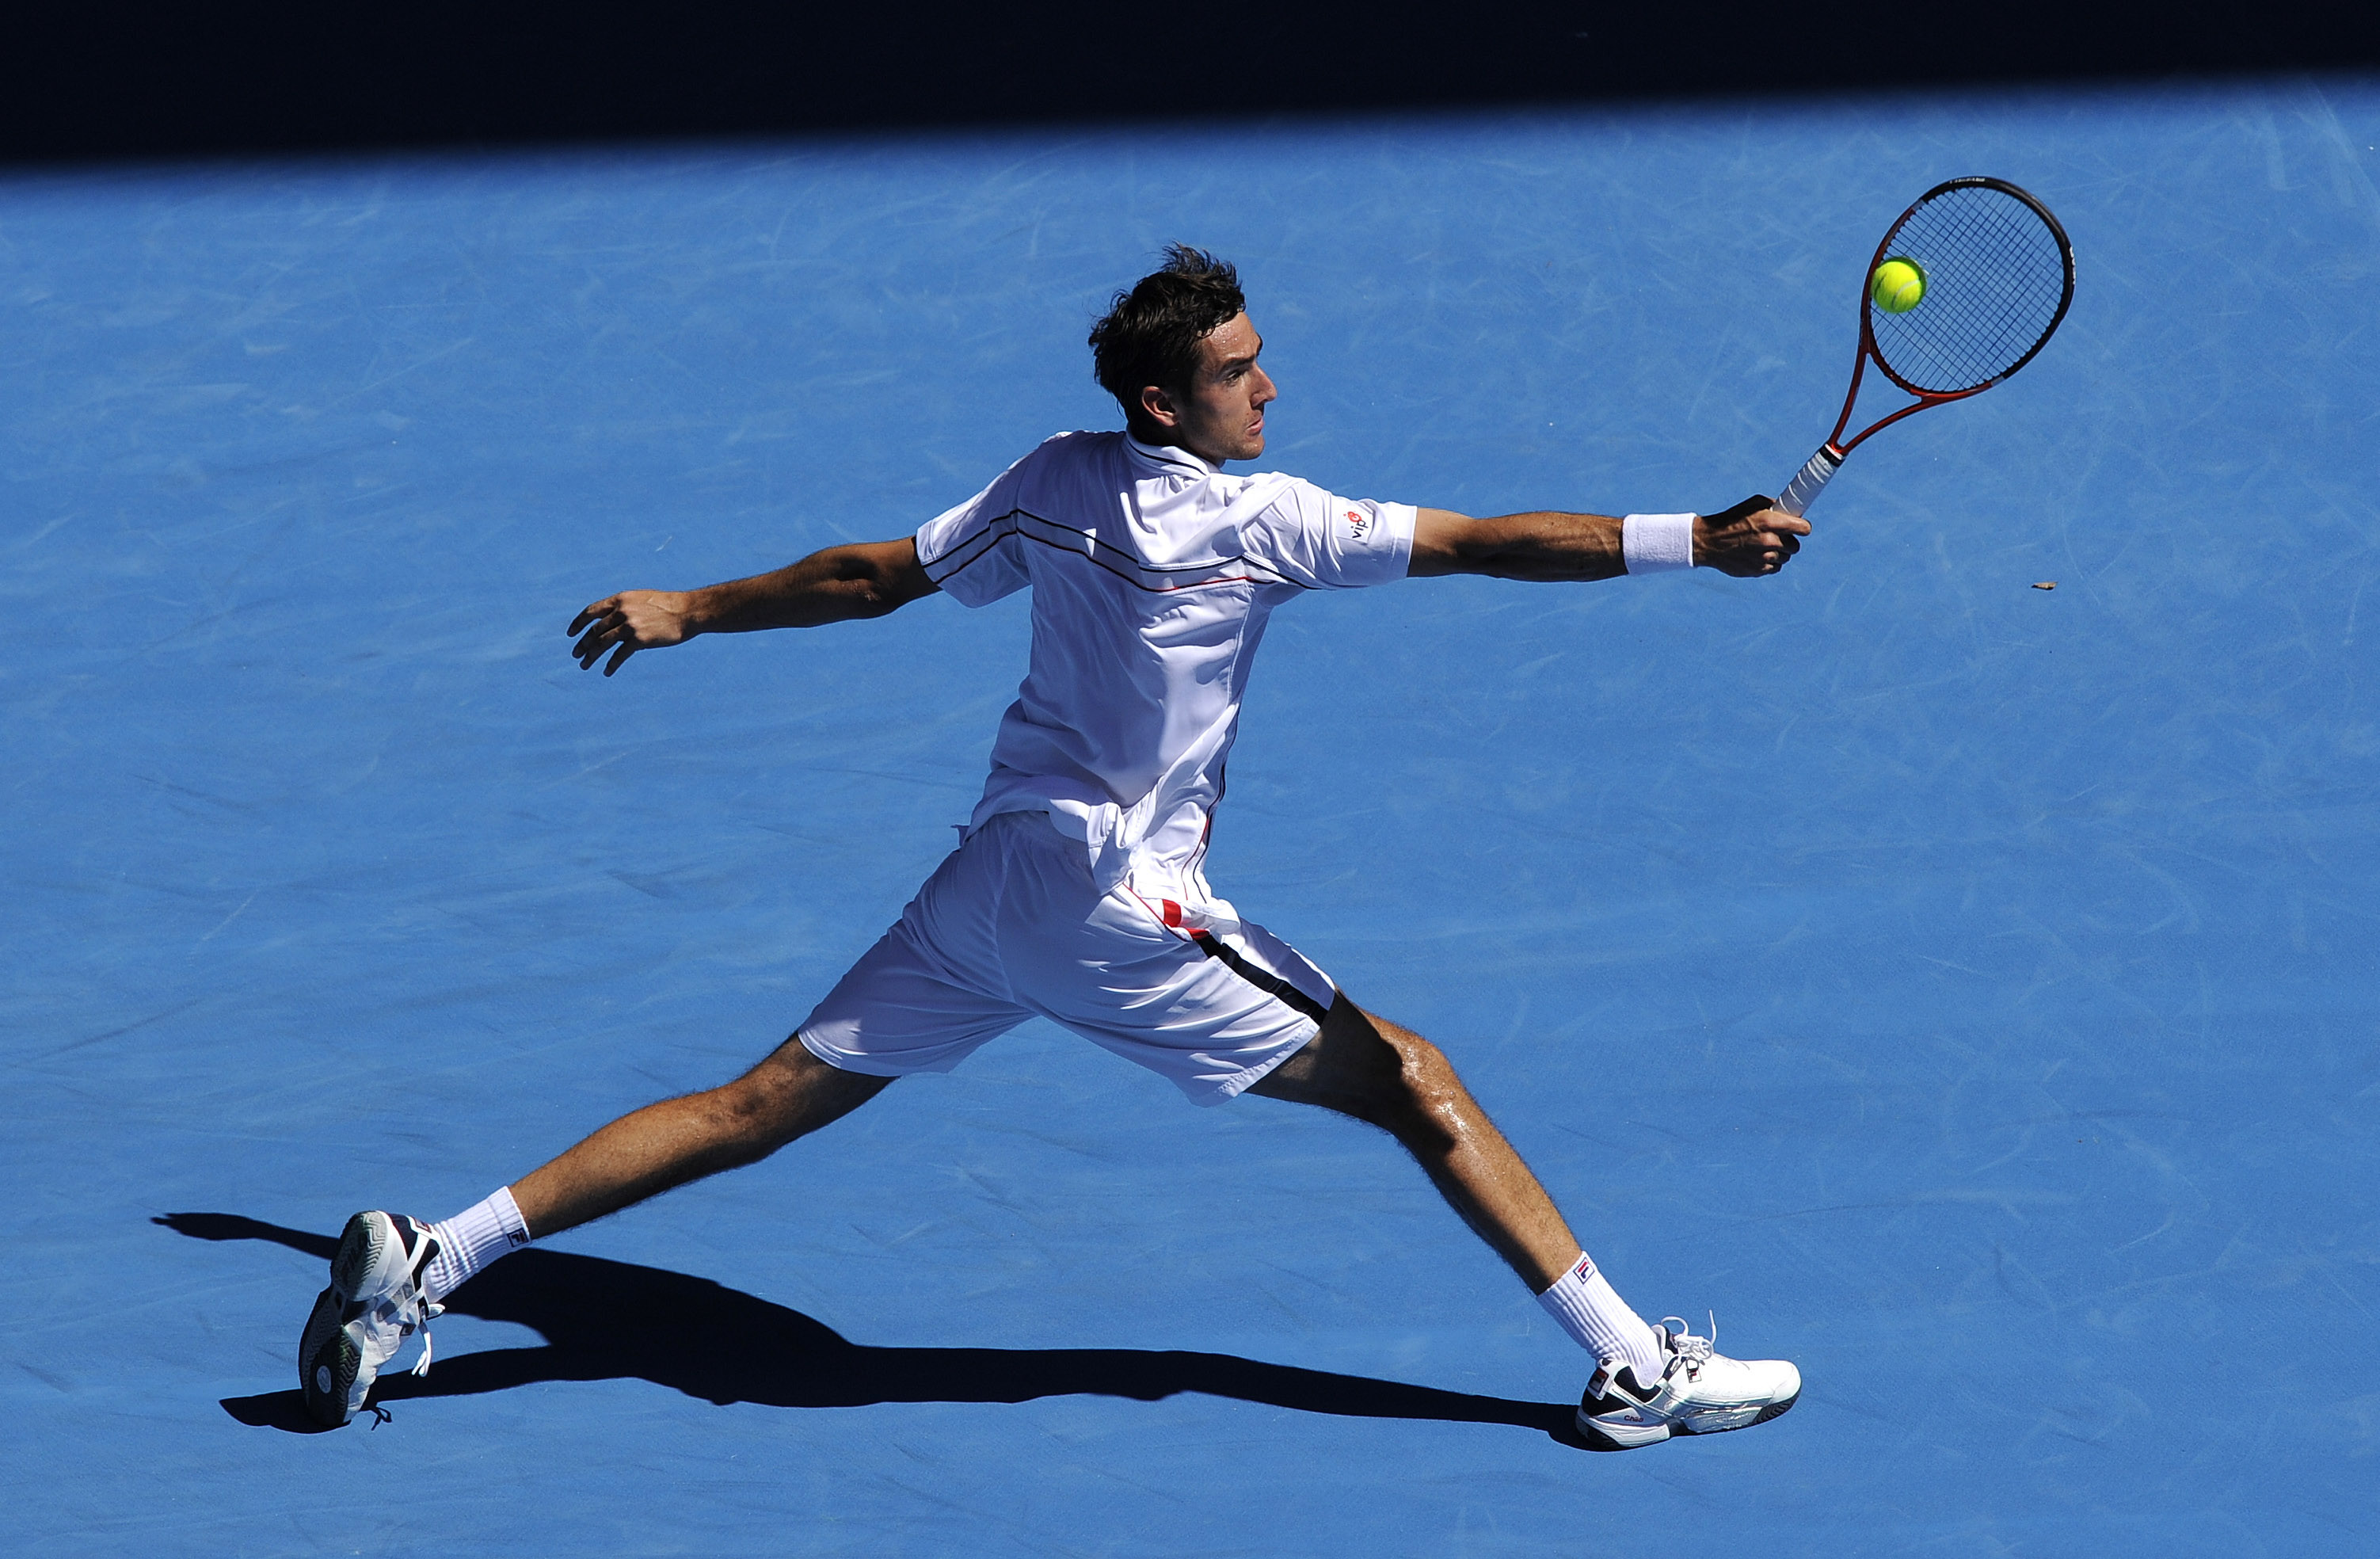 Andy Roddick, Roger Federer, Kvartsfinal, Australian Open, Juan Martin del Potro, Tennis, Andy Murray, Marin Cilic